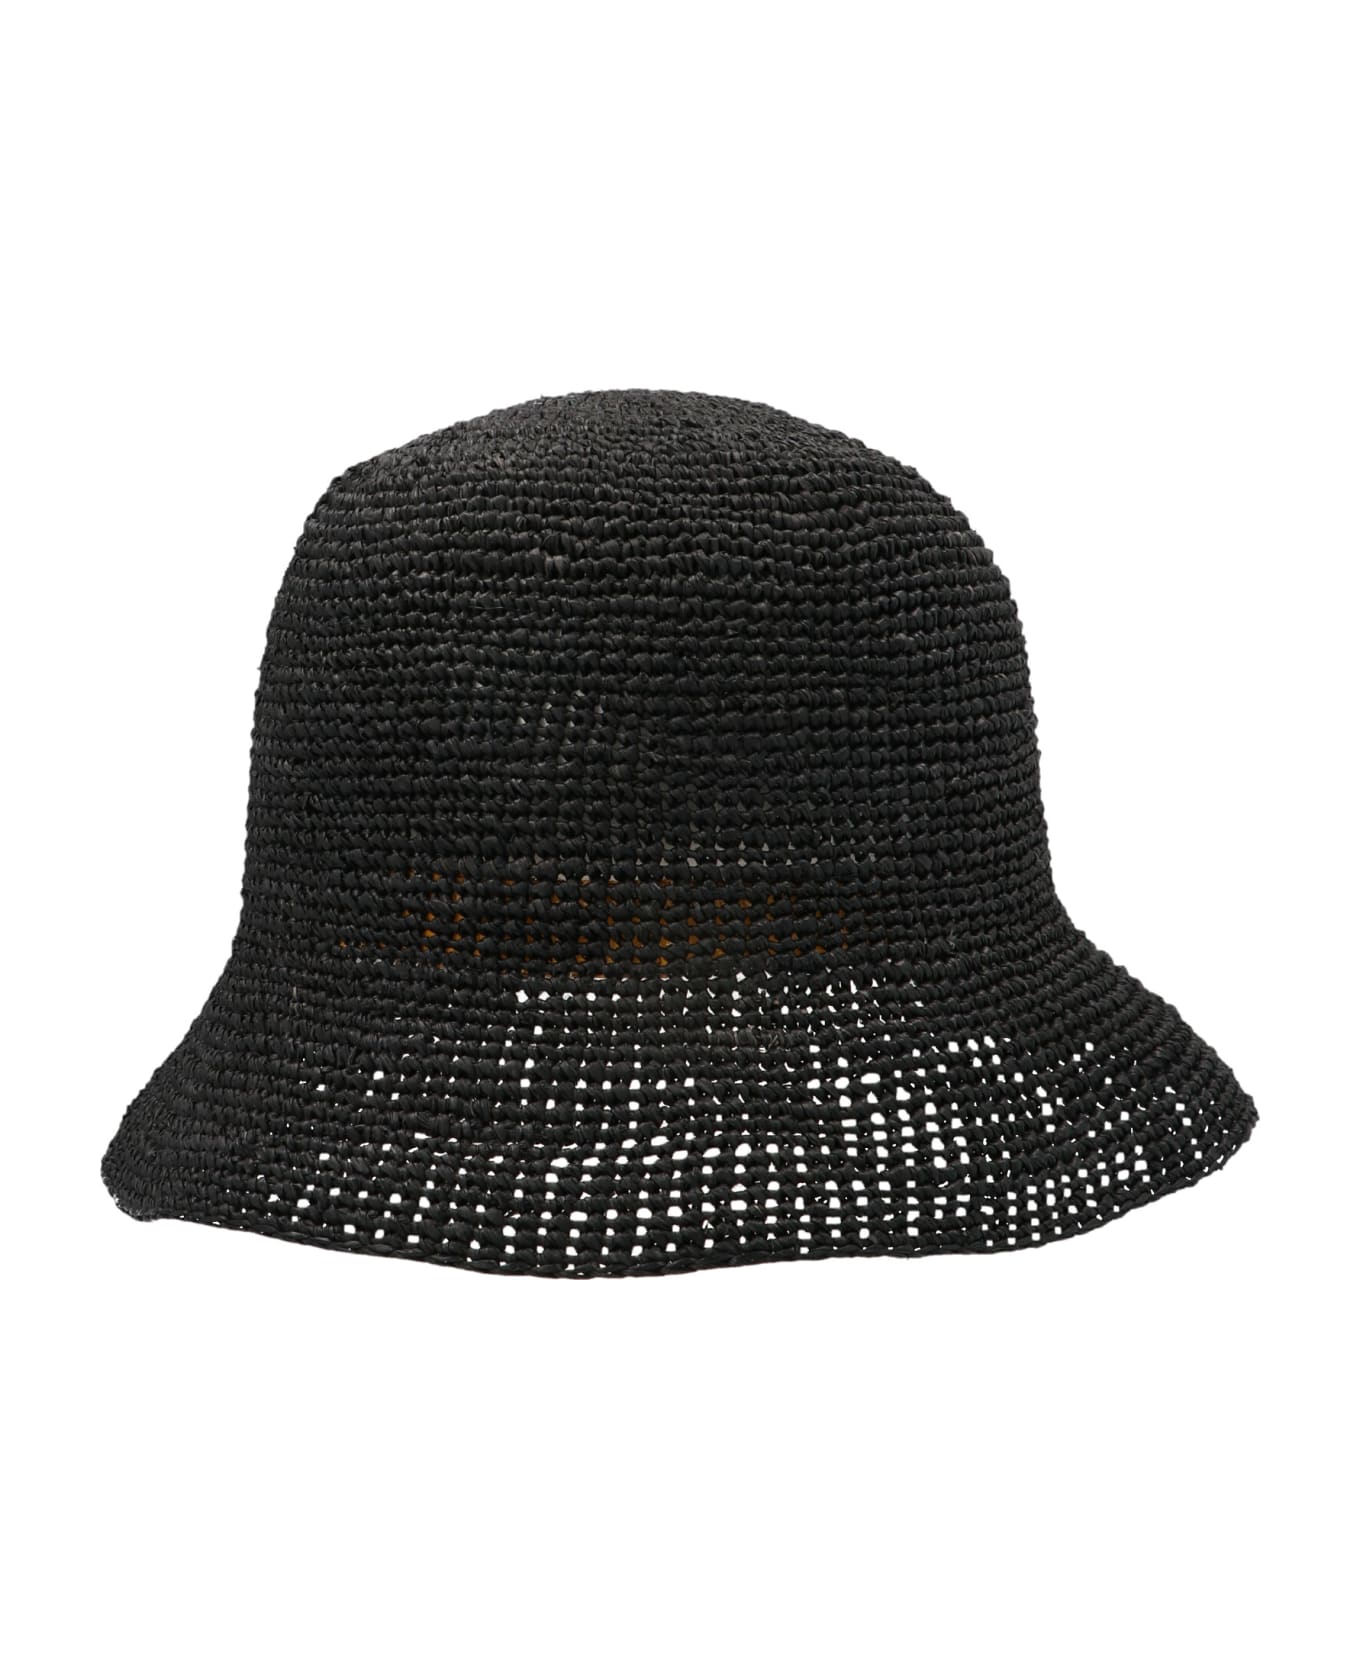 Ibeliv Andao Bucket Hat - Black  